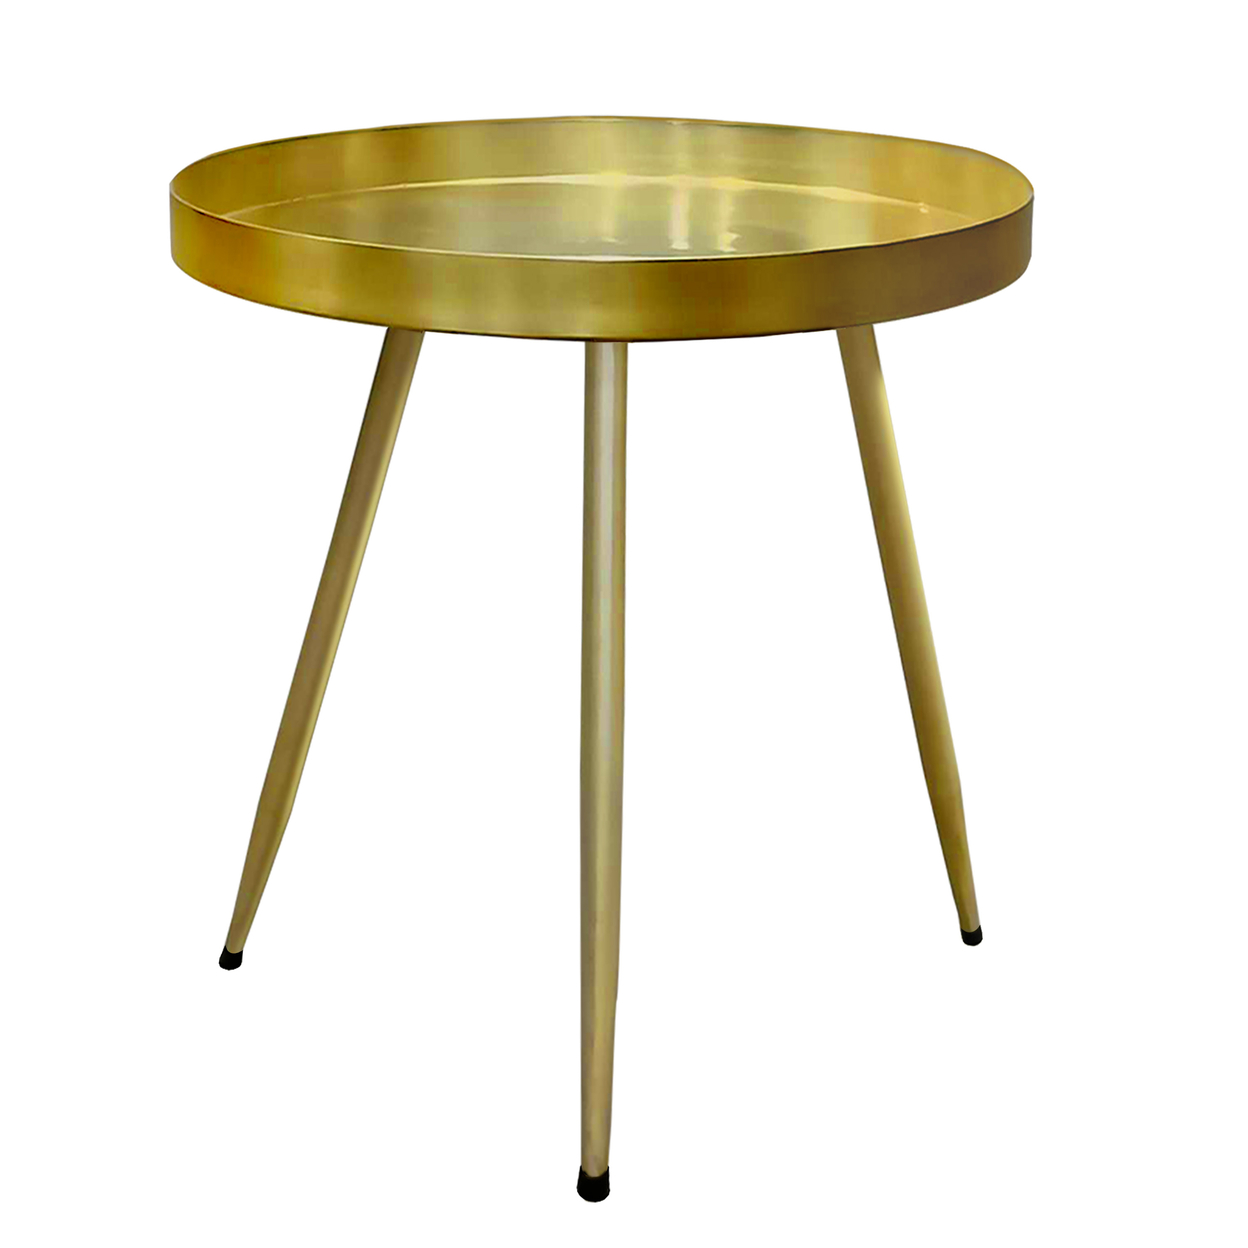 Enid 19 Inch Side End Table, Iron Brass Plating, Tray Top, Modern Sleek Angled Legs - Saltoro Sherpi